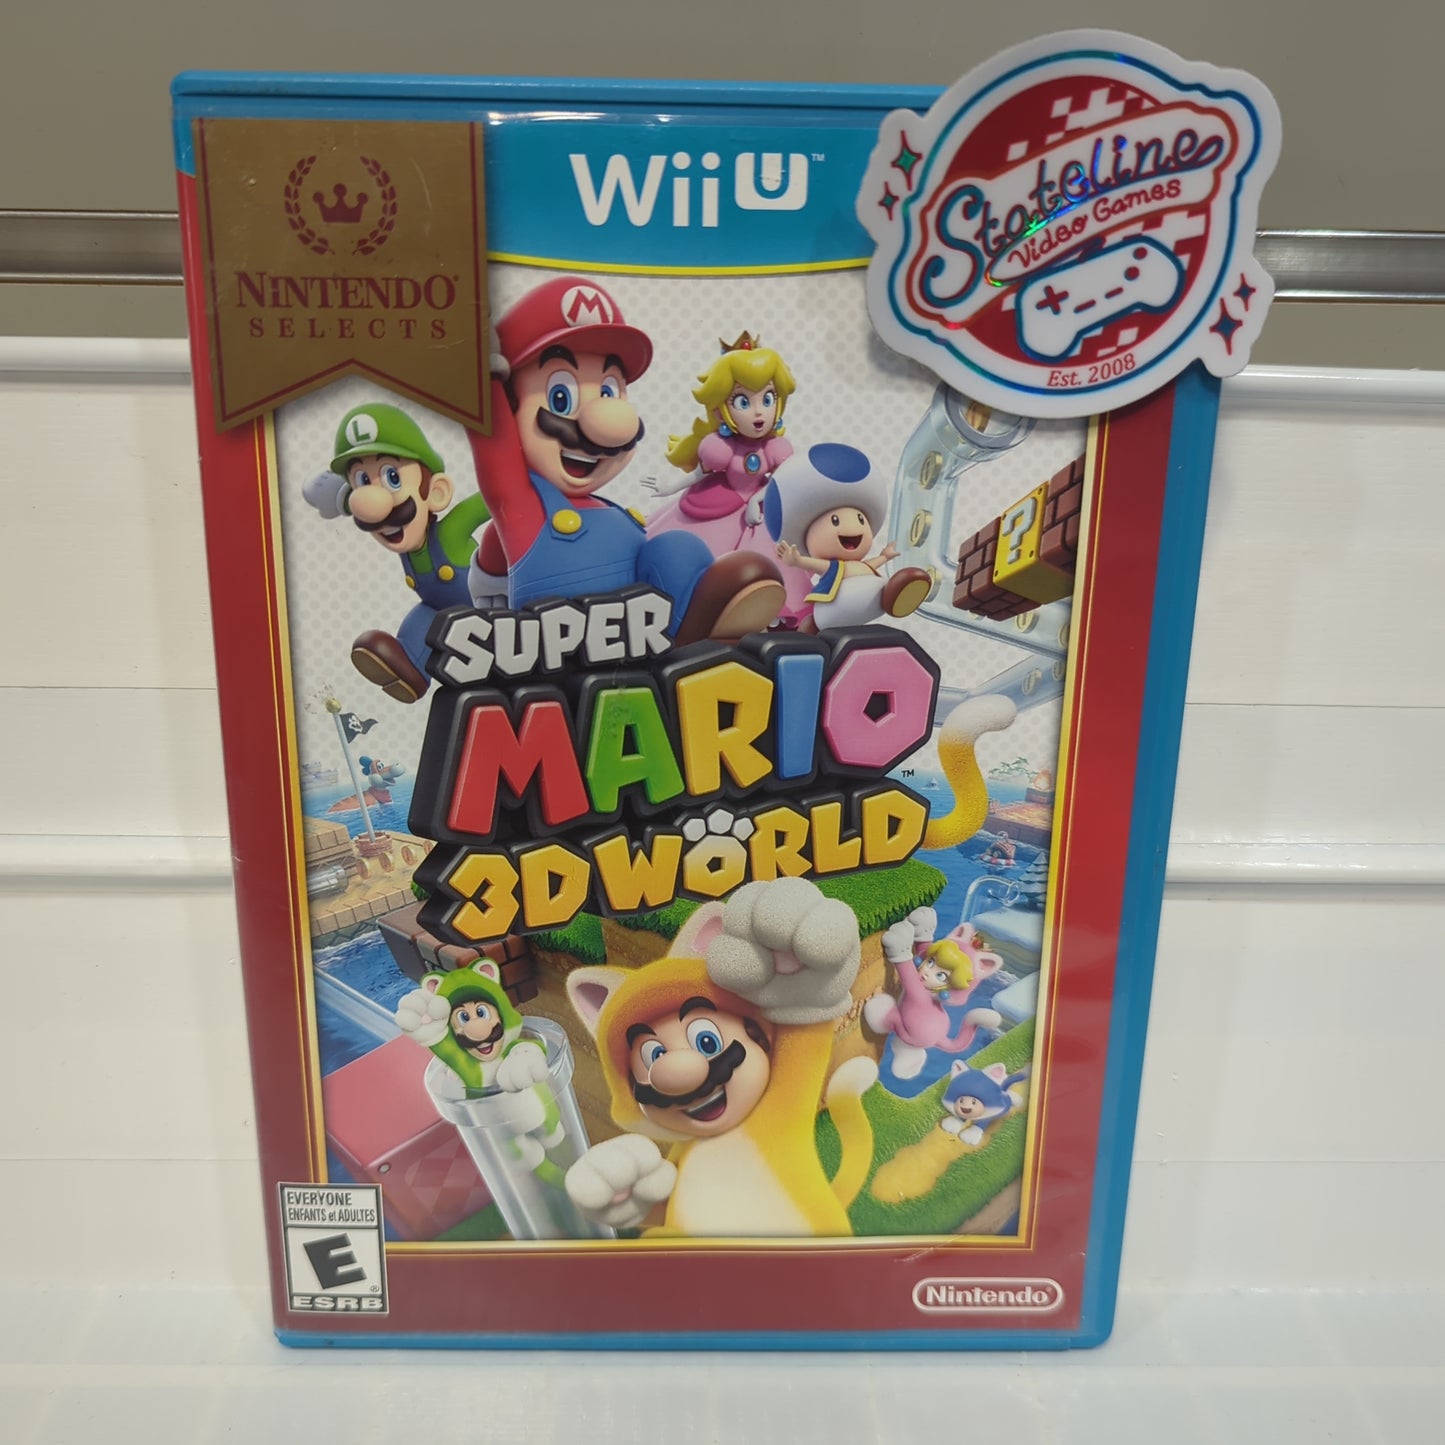 Super Mario 3D World - Wii U